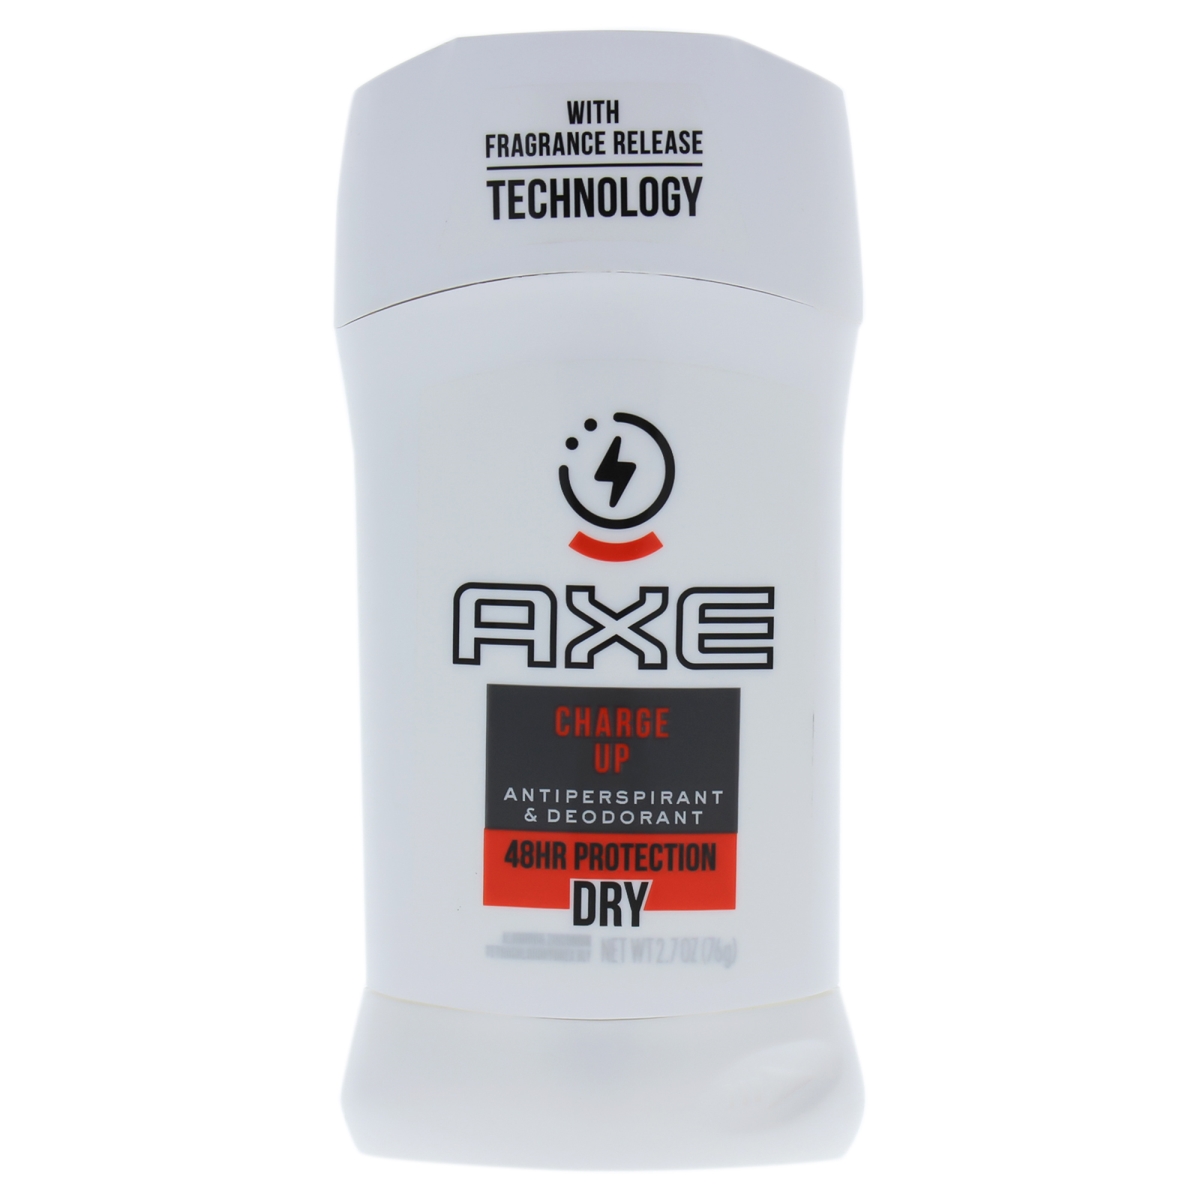 I0084302 Charge Up 48 Hour Dry Antiperspirant & Deodorant Stick For Men - 2.7 Oz